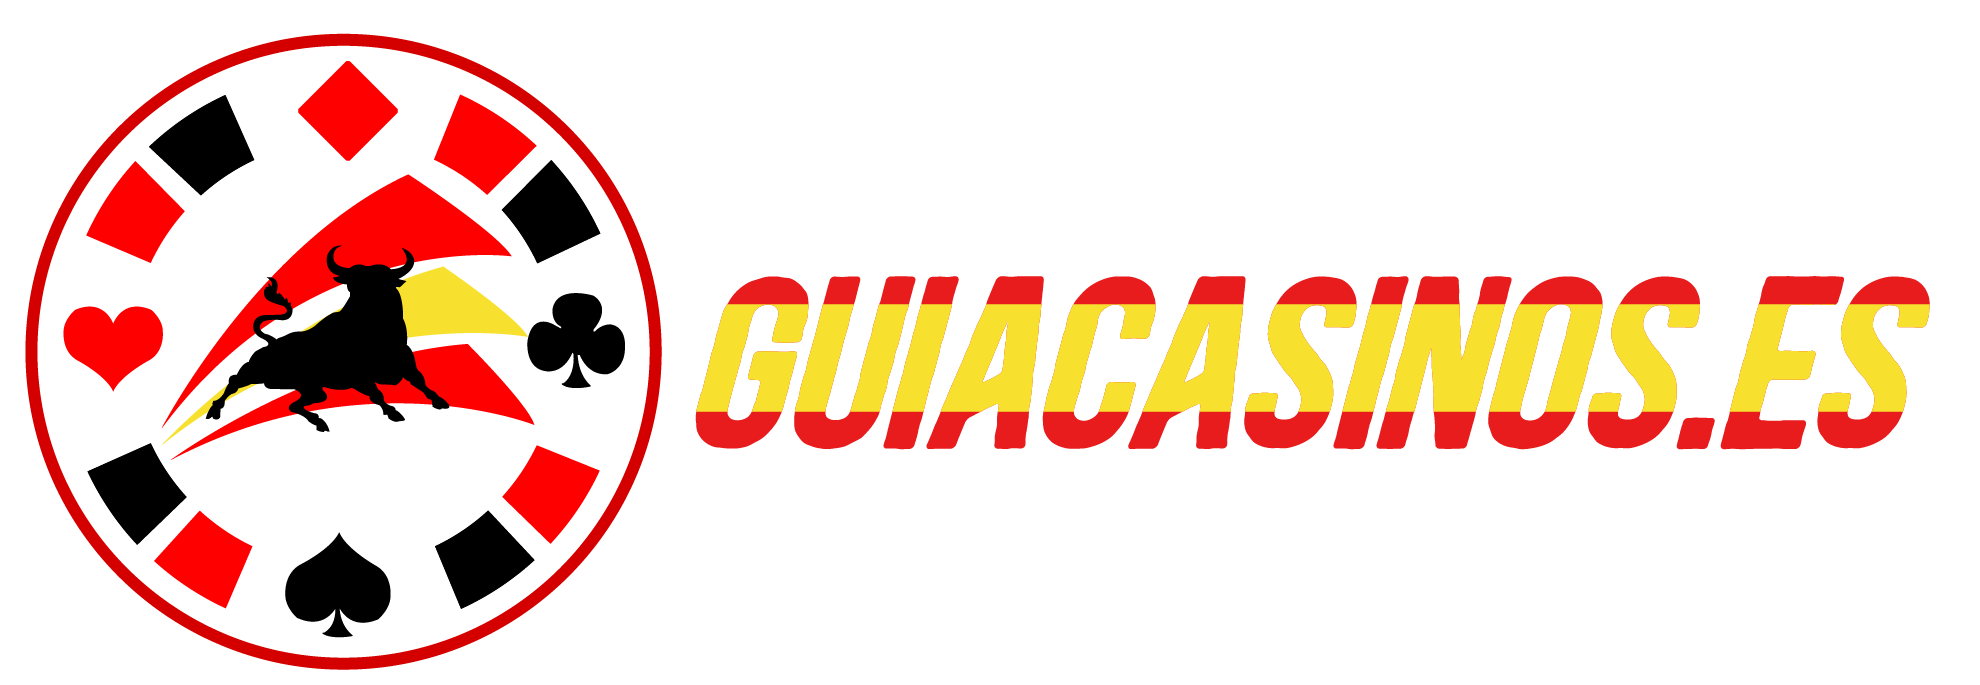 Guiacasinos.es